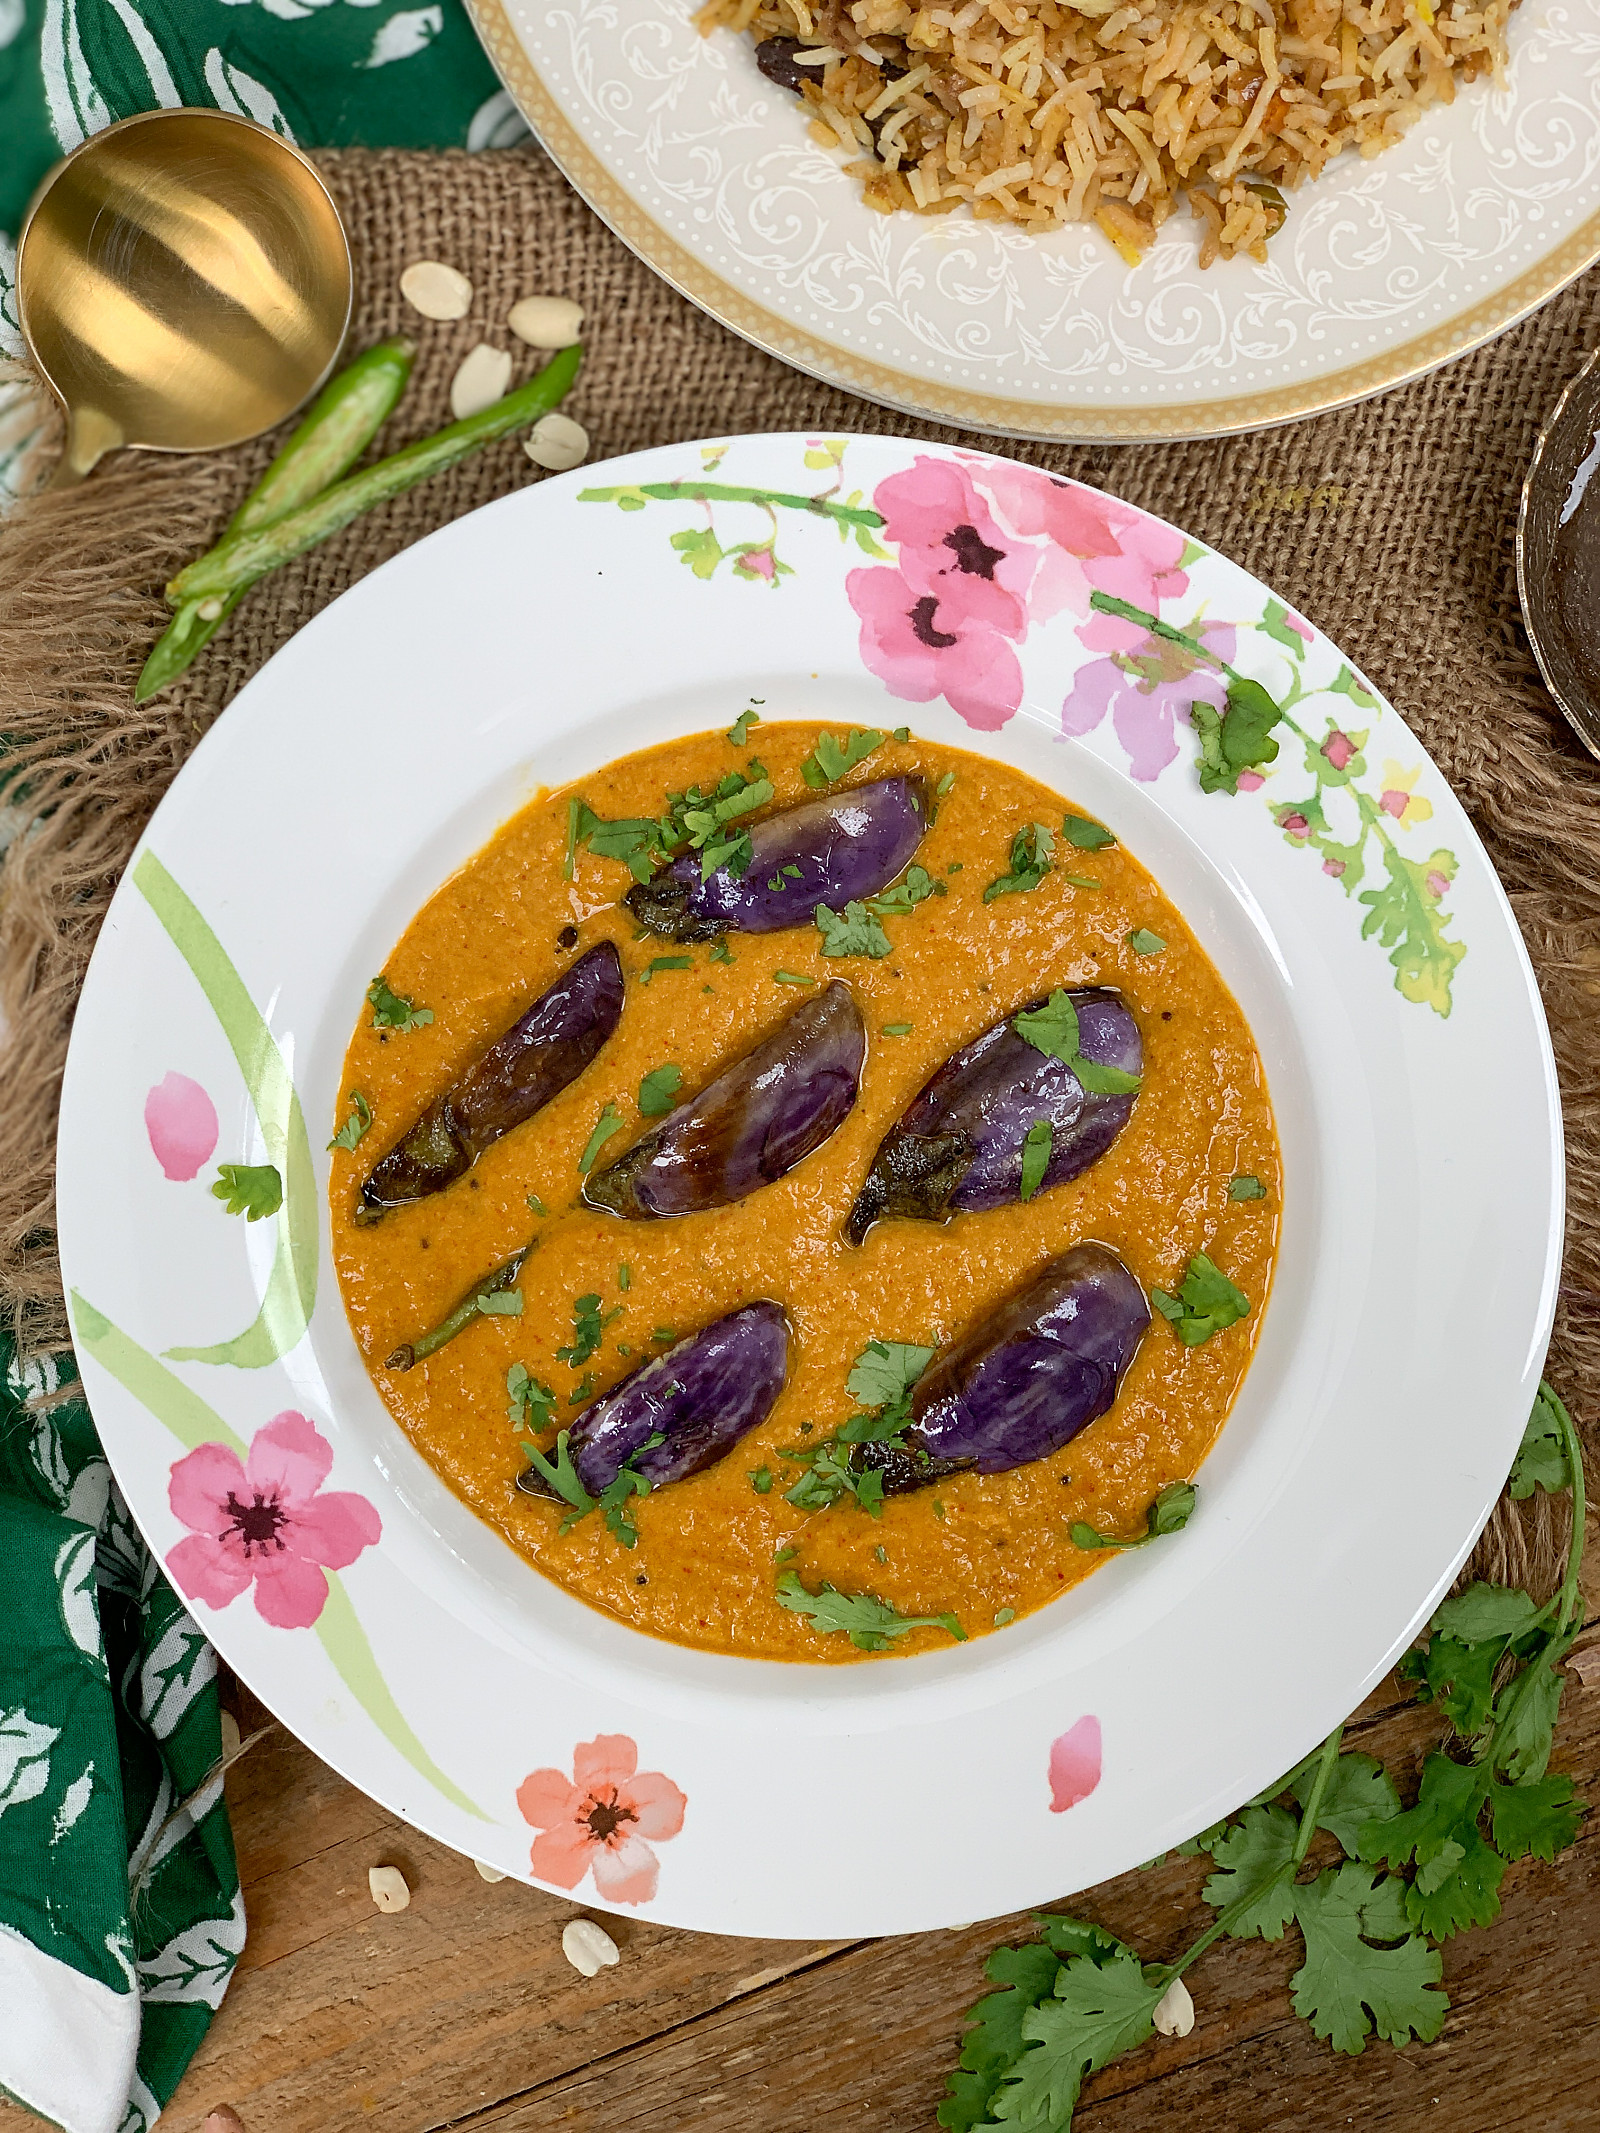 Hyderabadi Bagara Baingan Recipe - Brinjal In Spicy Peanut Curry